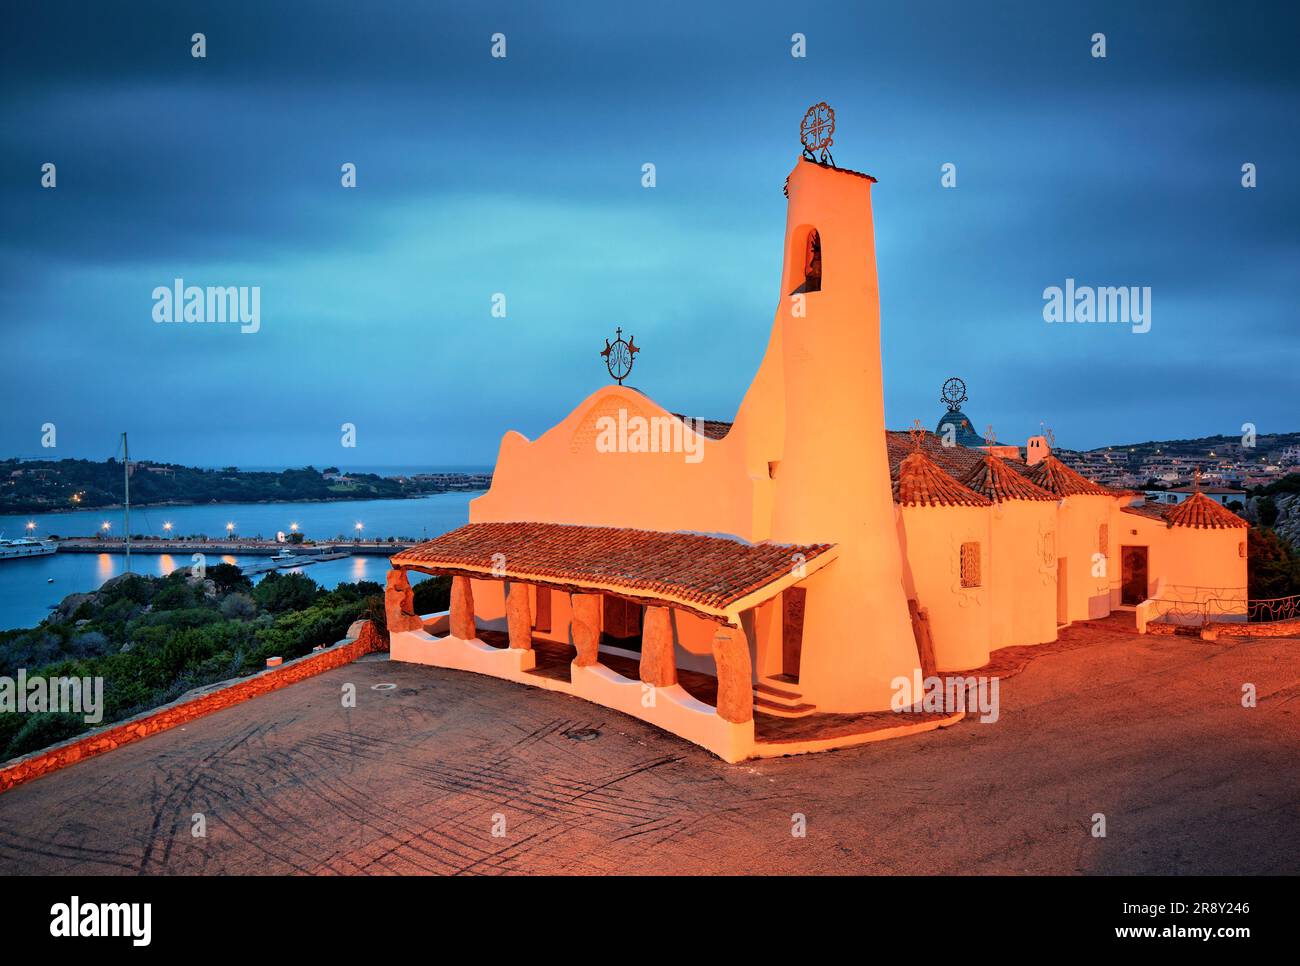 The church symbol of costa smeralda - The Stella Maris, Porto Cervo, Sardinia Stock Photo